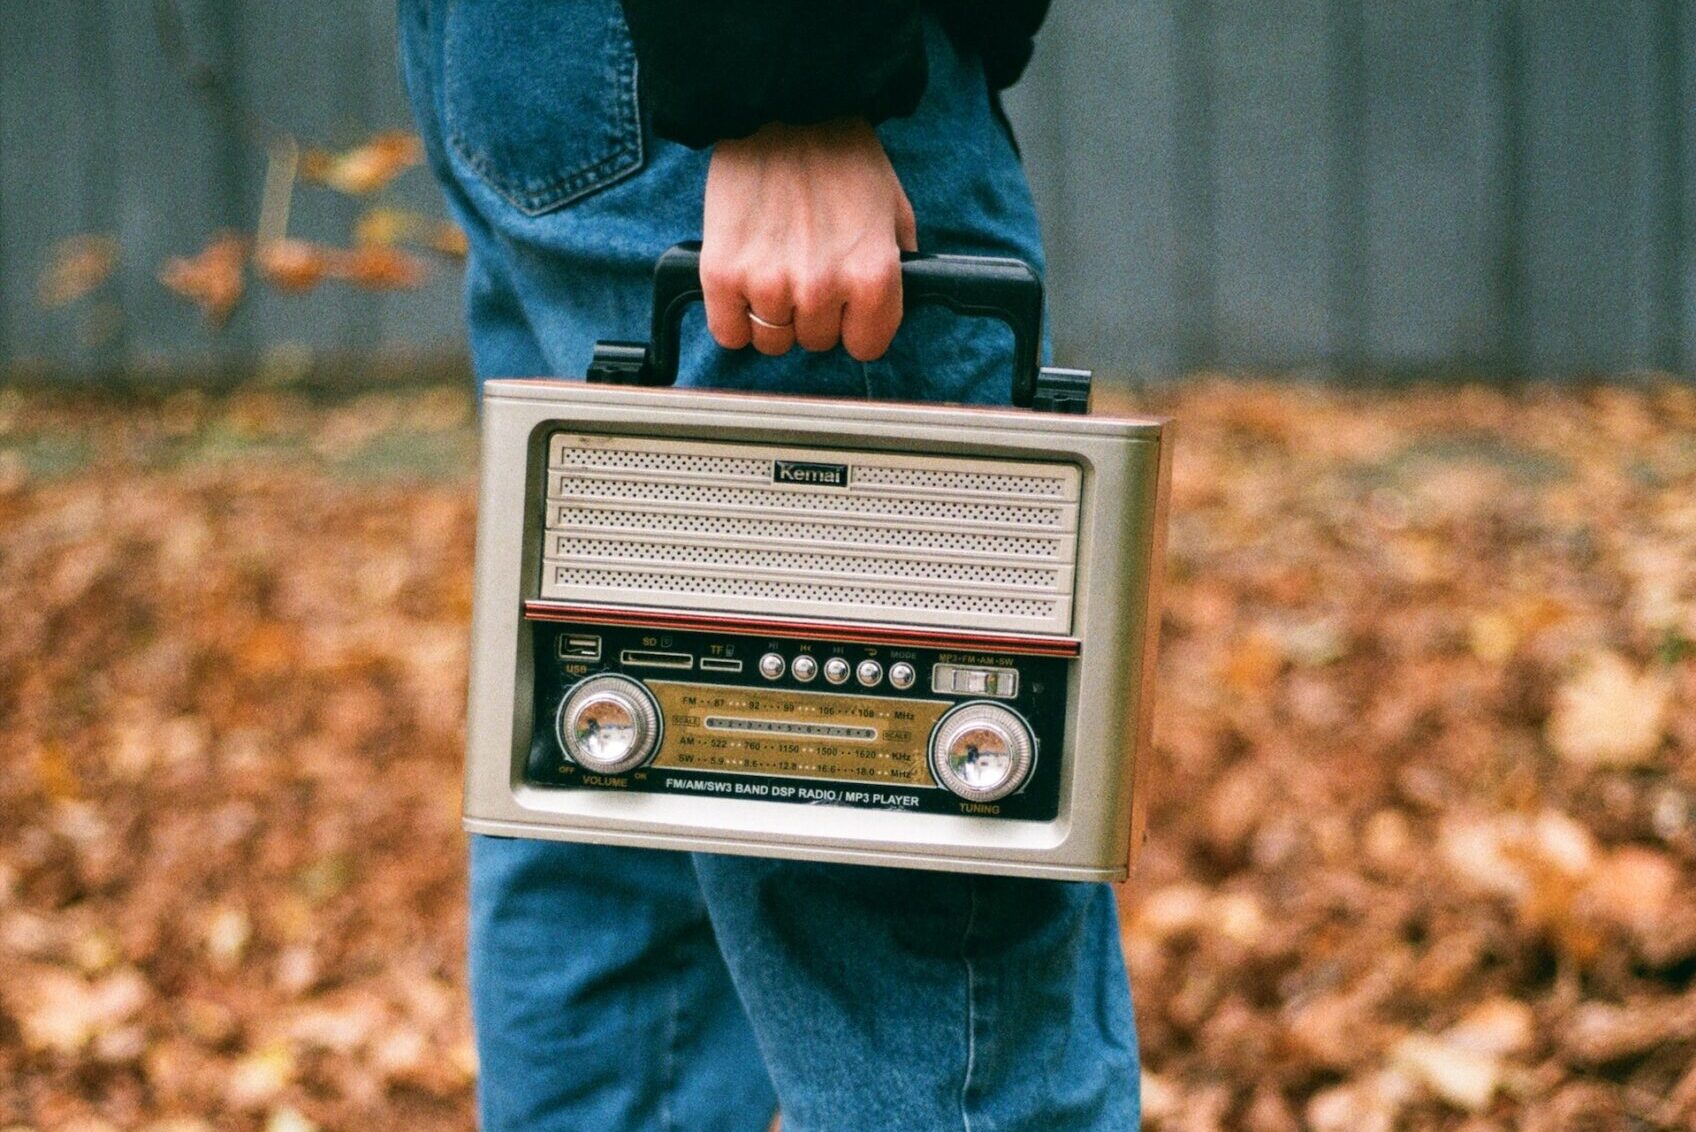 holding a radio